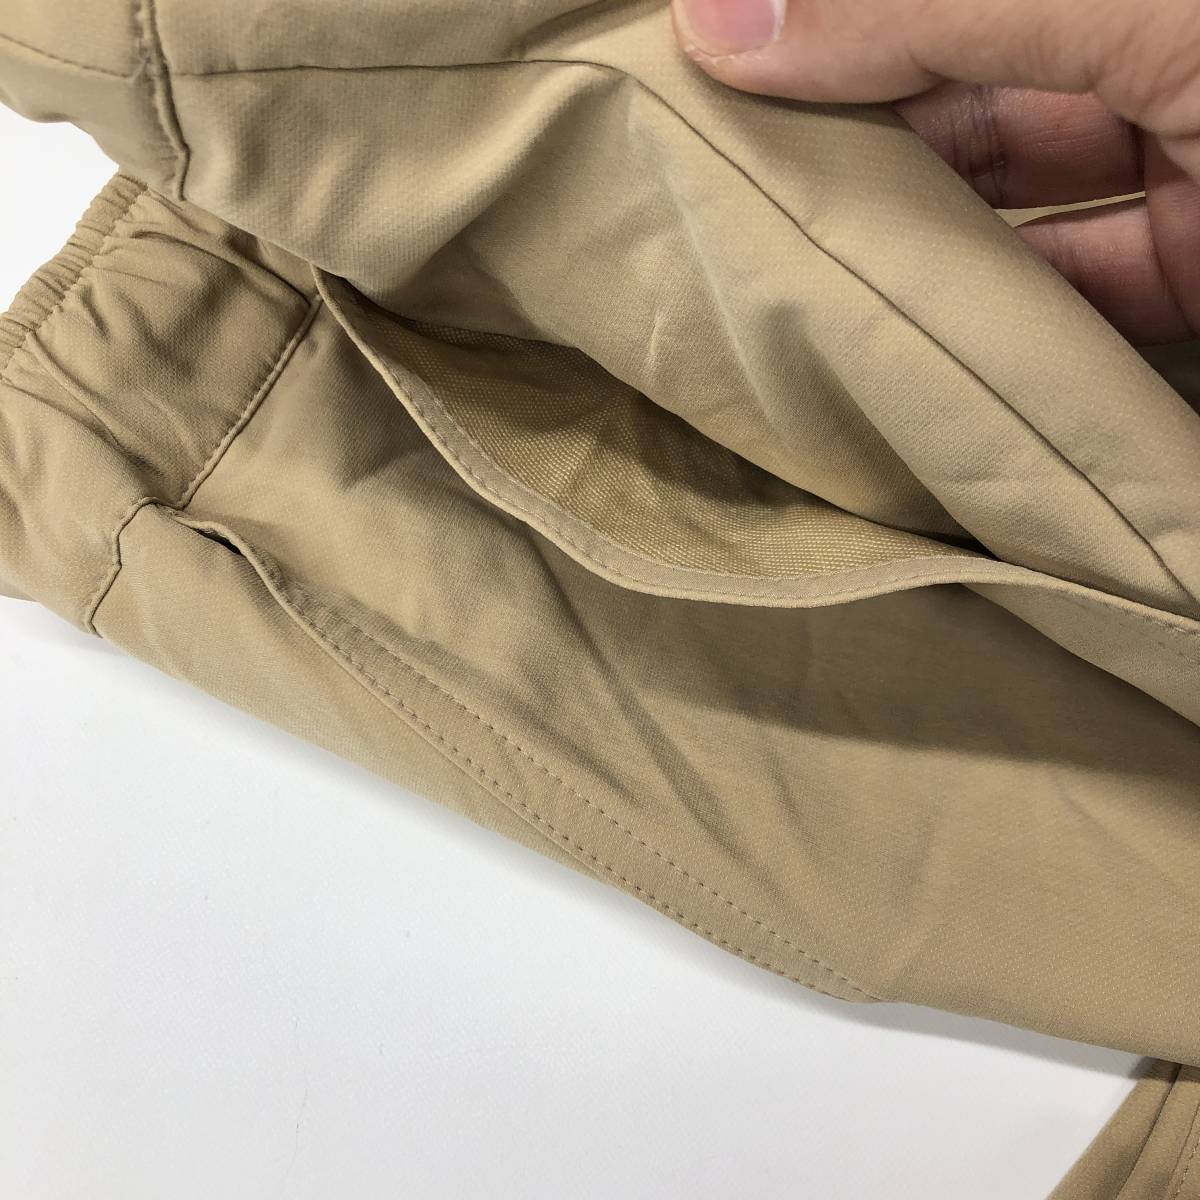  New balance NB nylon u-bn pants JWPL1826 beige lady's XL size 